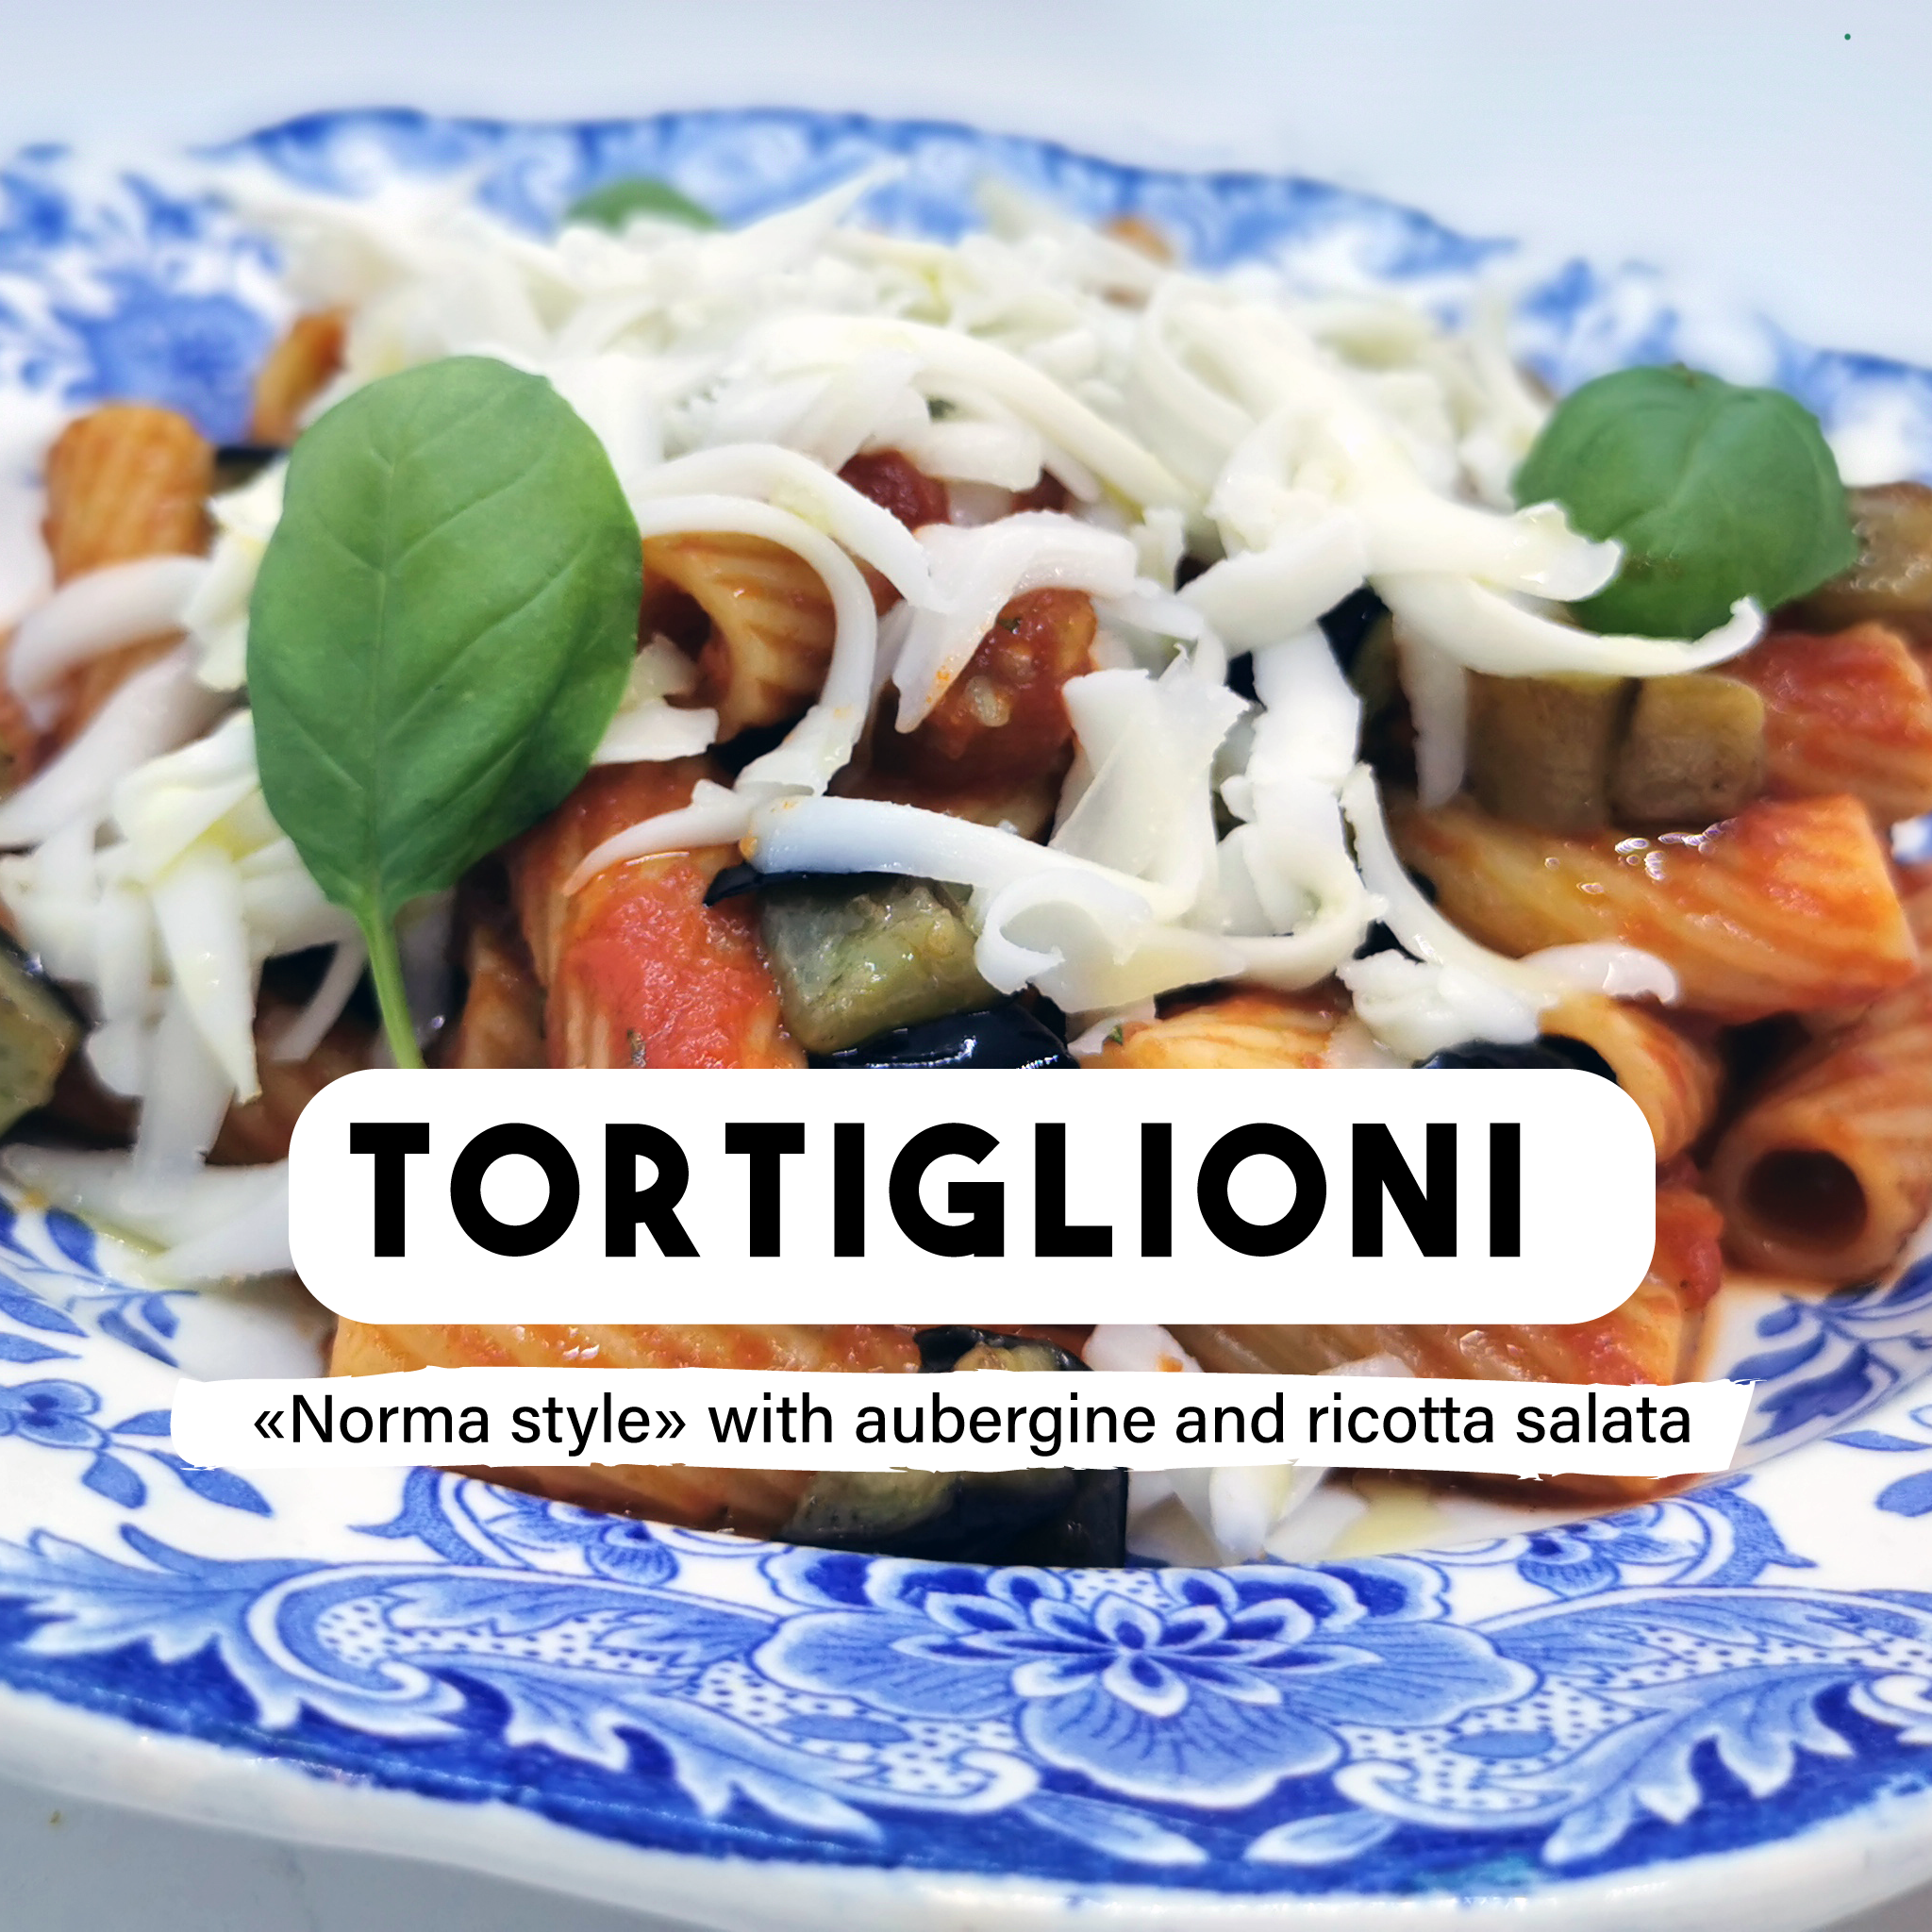 Tortiglioni "Norma style" with aubergine and ricotta salata